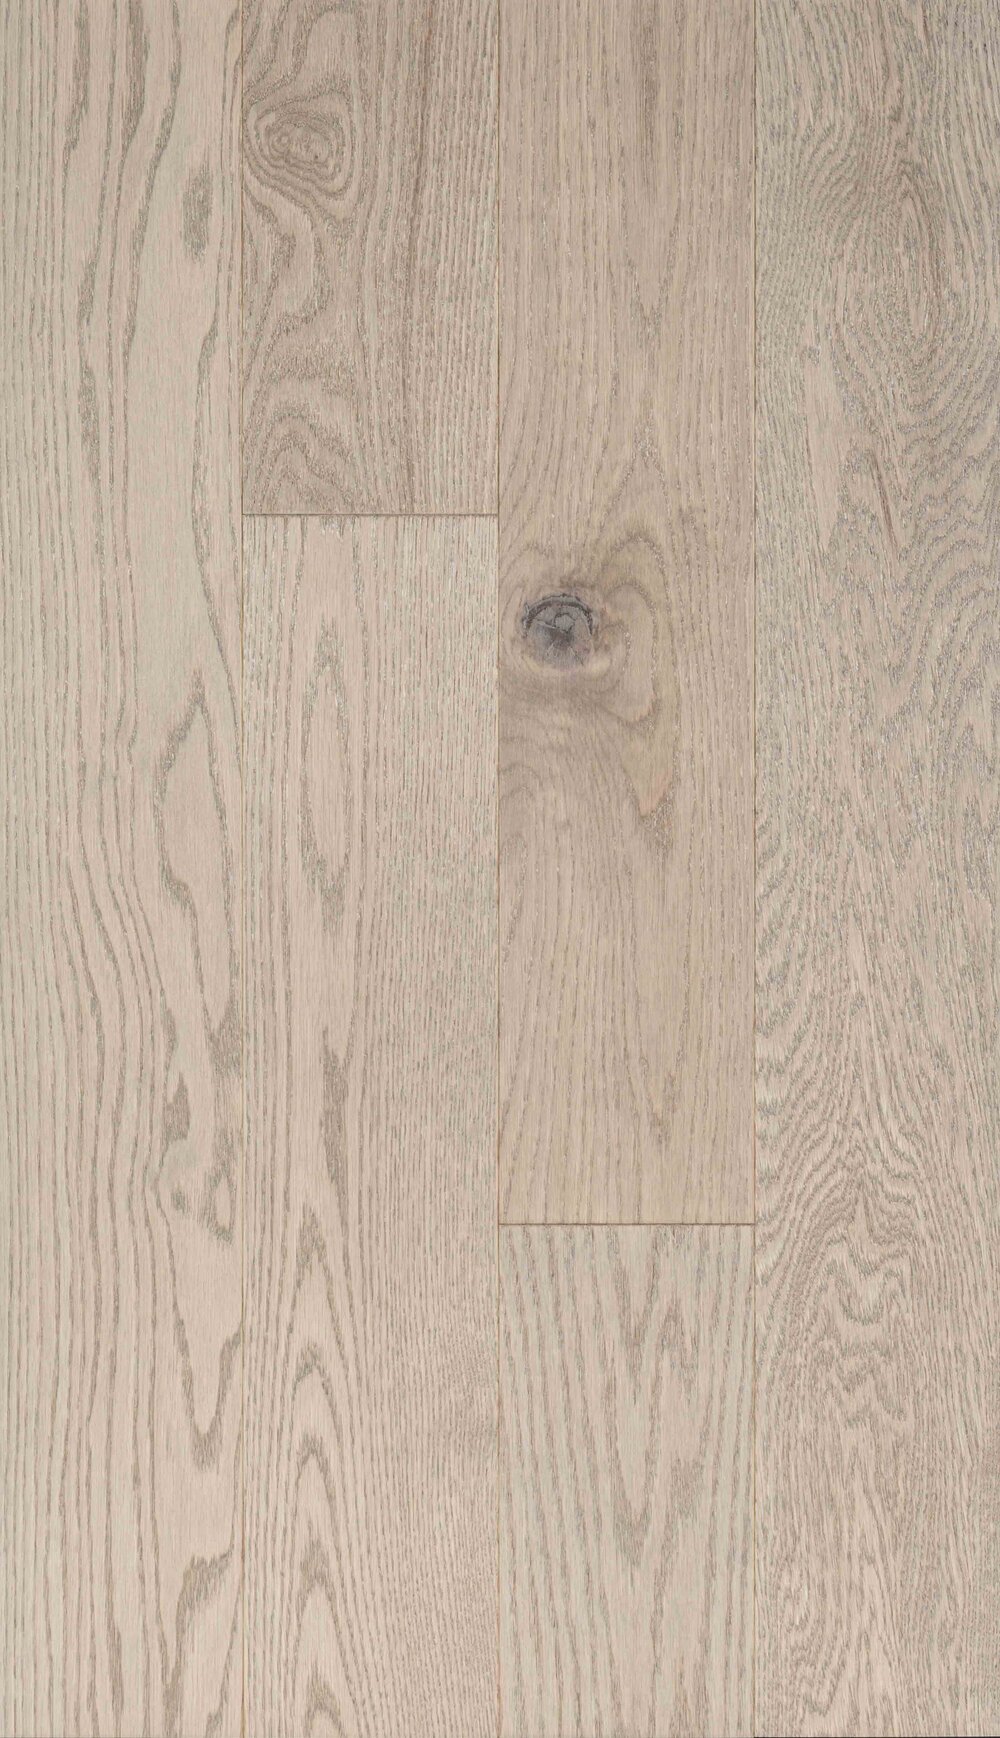 Titanium Red Oak Boardwalk Hardwood, Wire Brushed Oak Hardwood Flooring